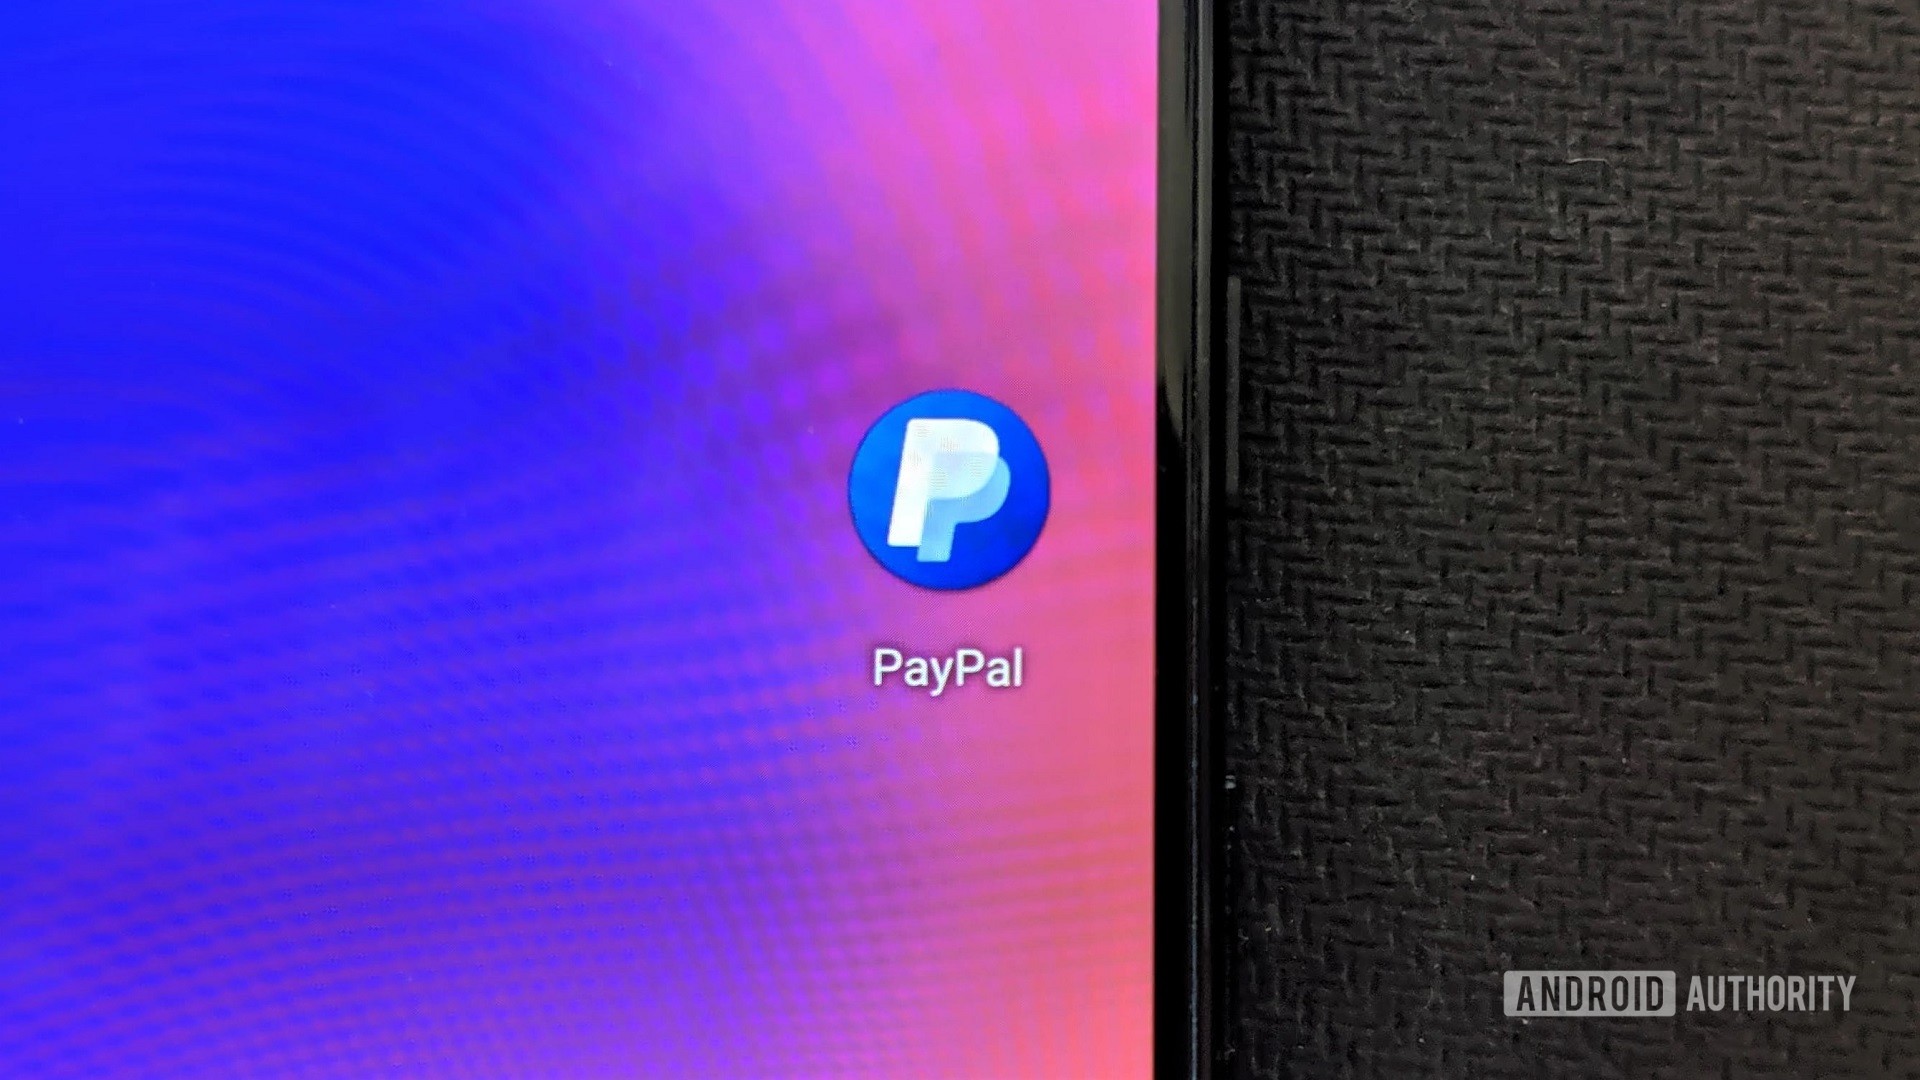 PayPal app on phone